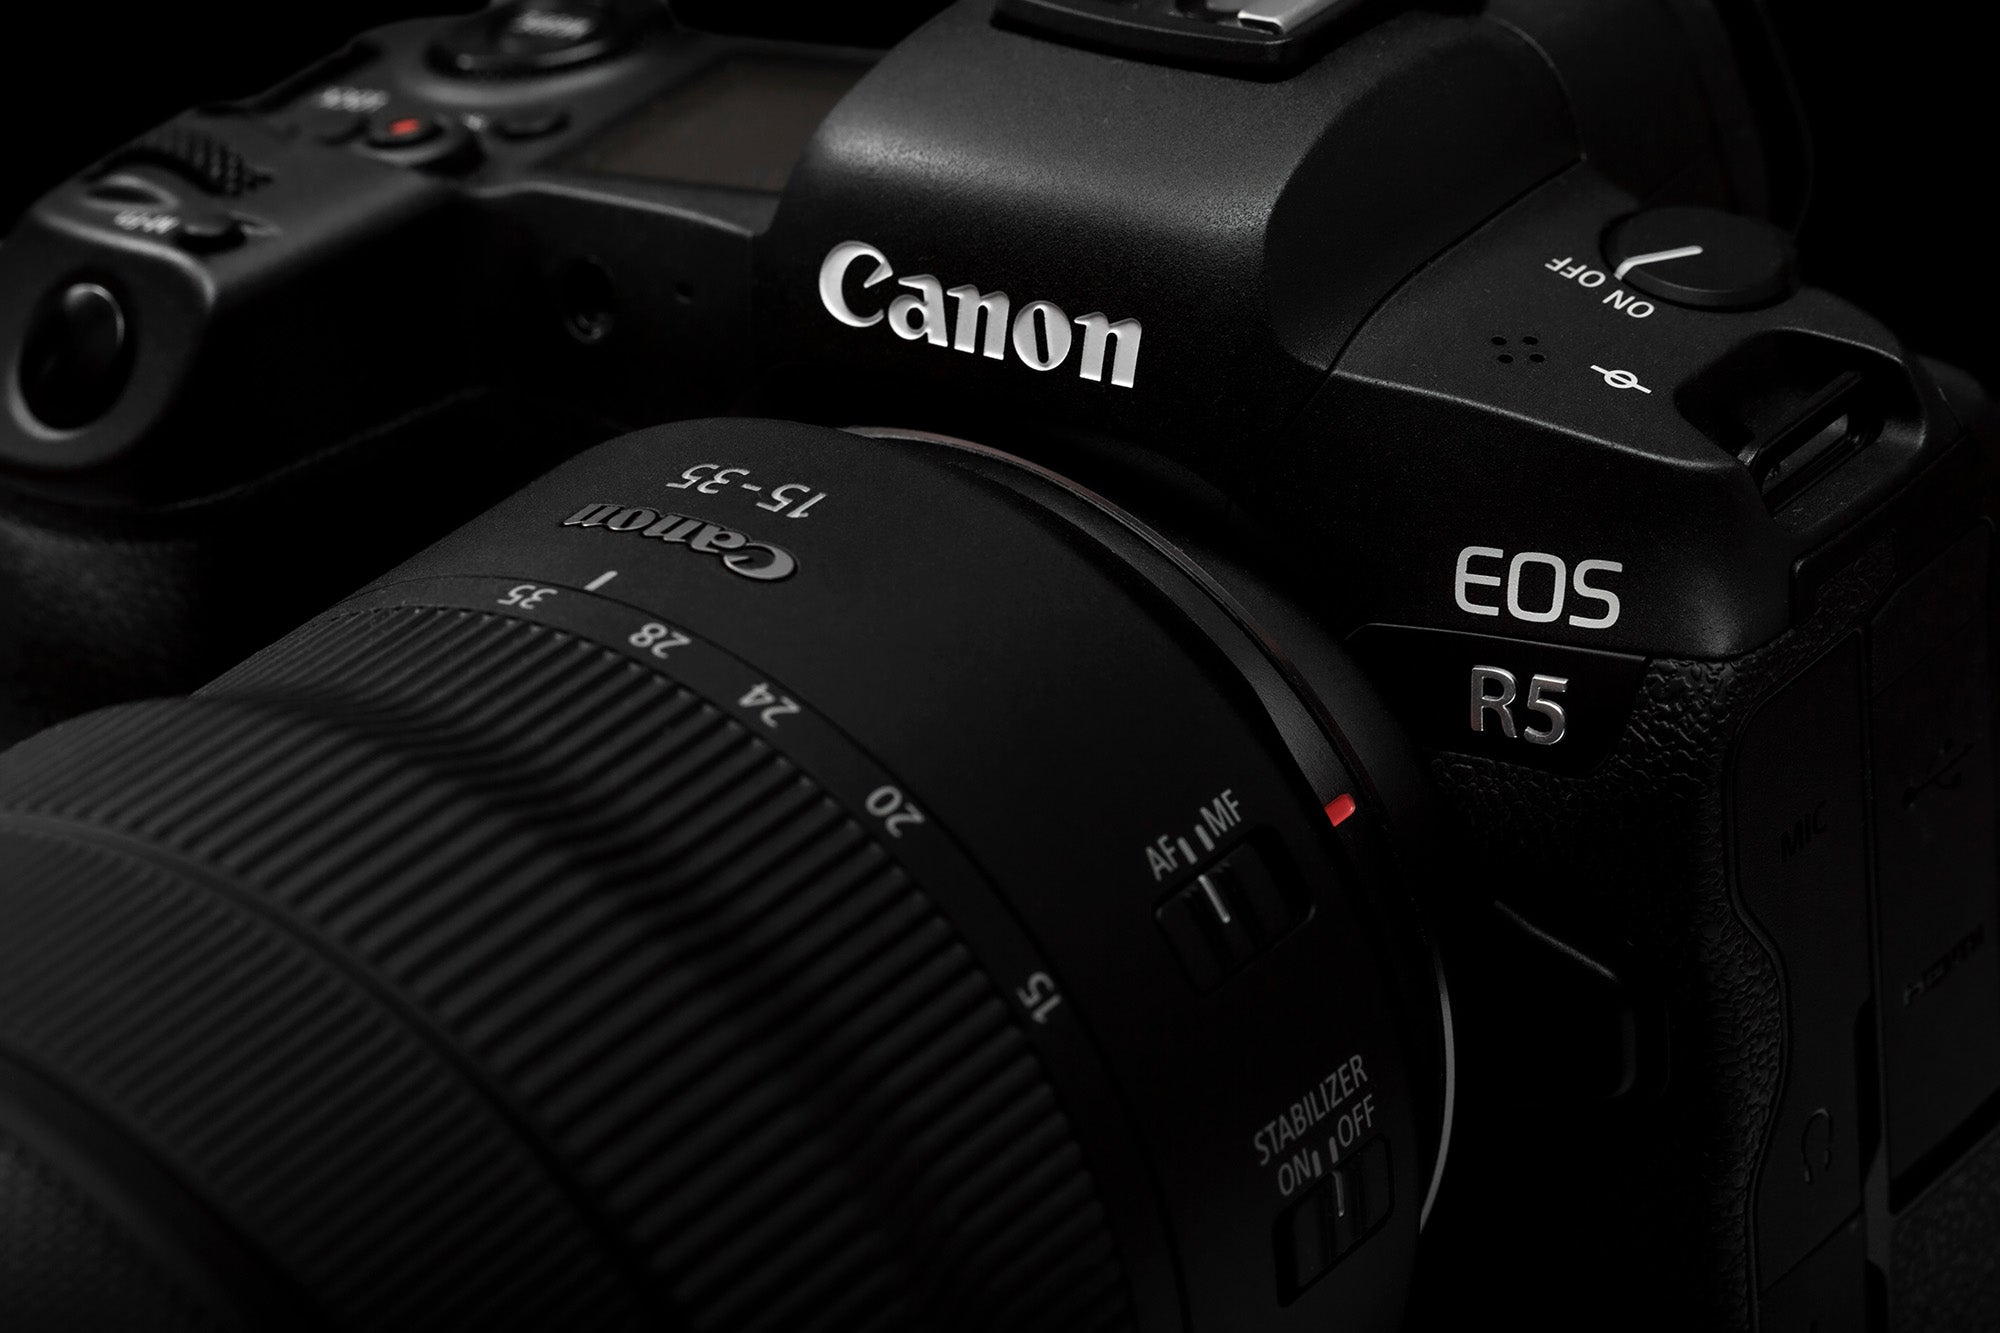 Canon EOS R5 Camera Announced With 45MP Sensor, 8K RAW & More